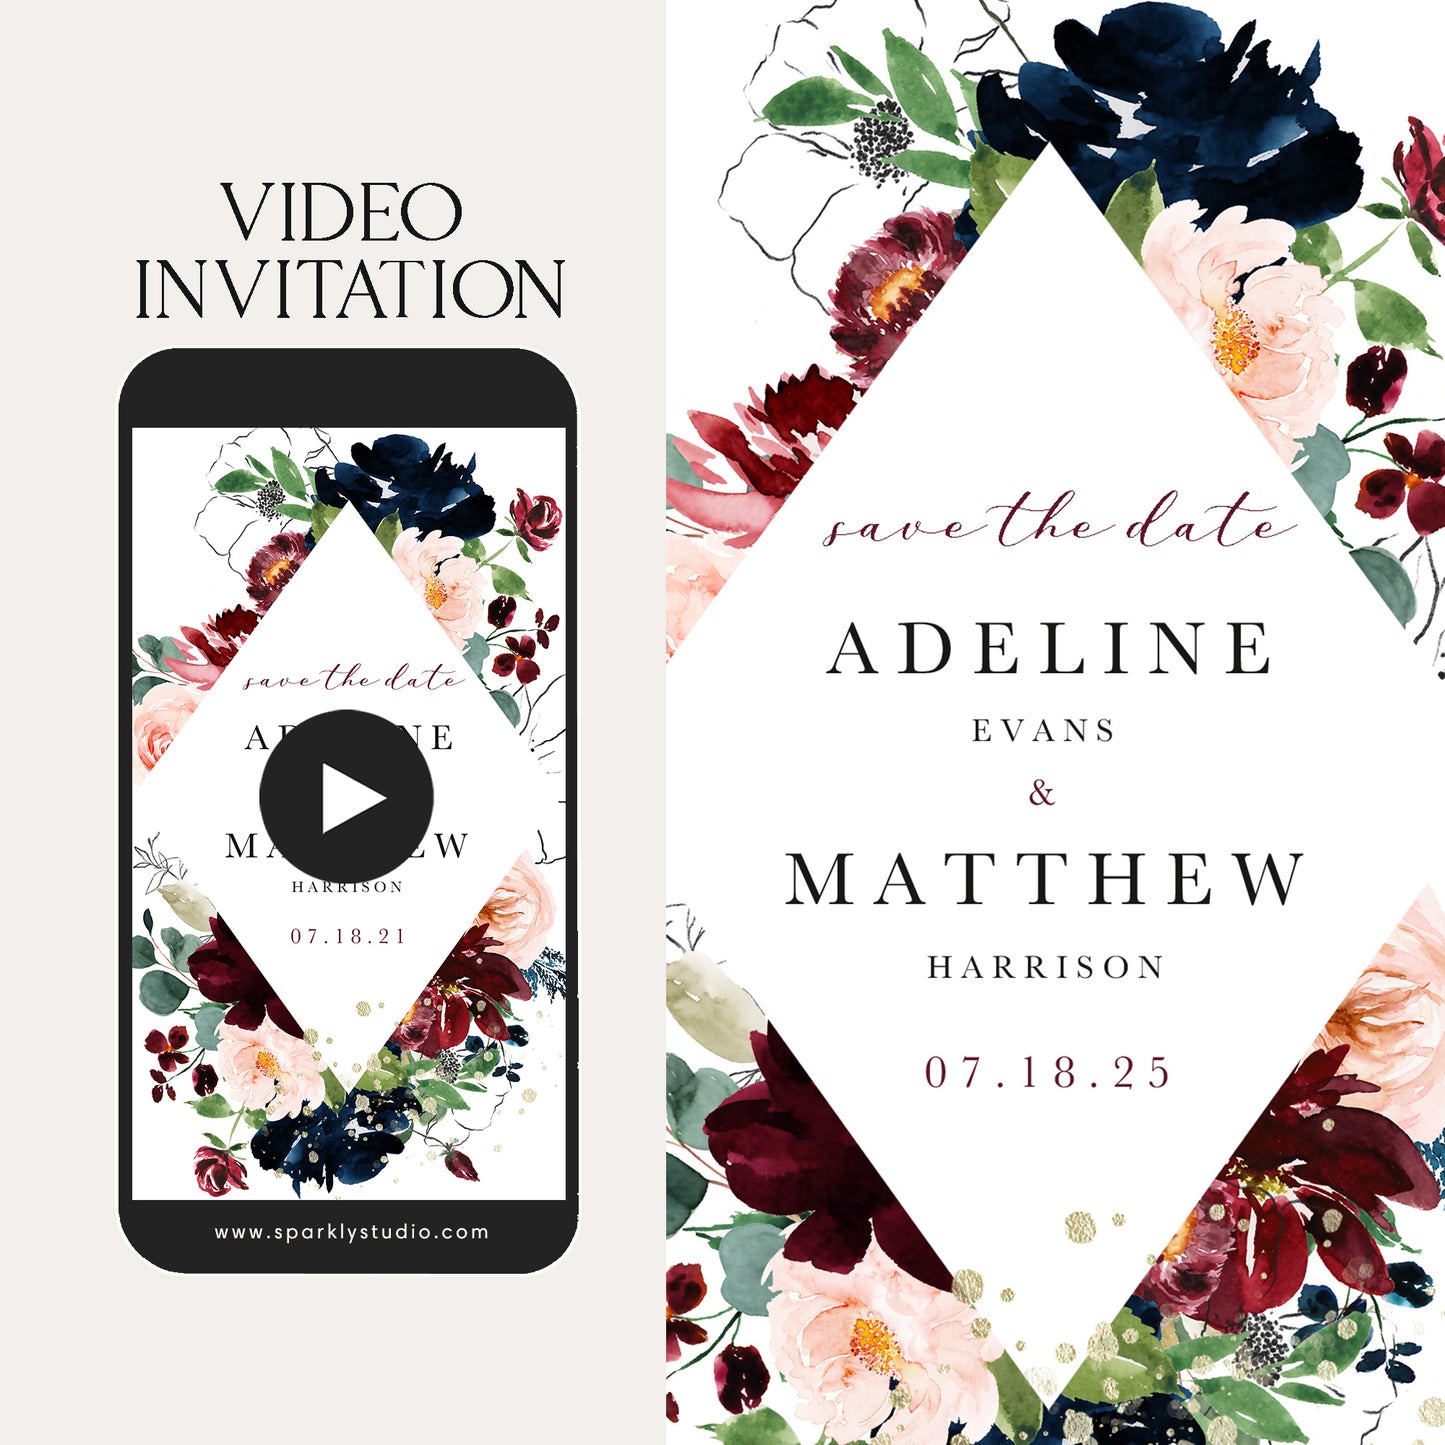 wedding video invitation